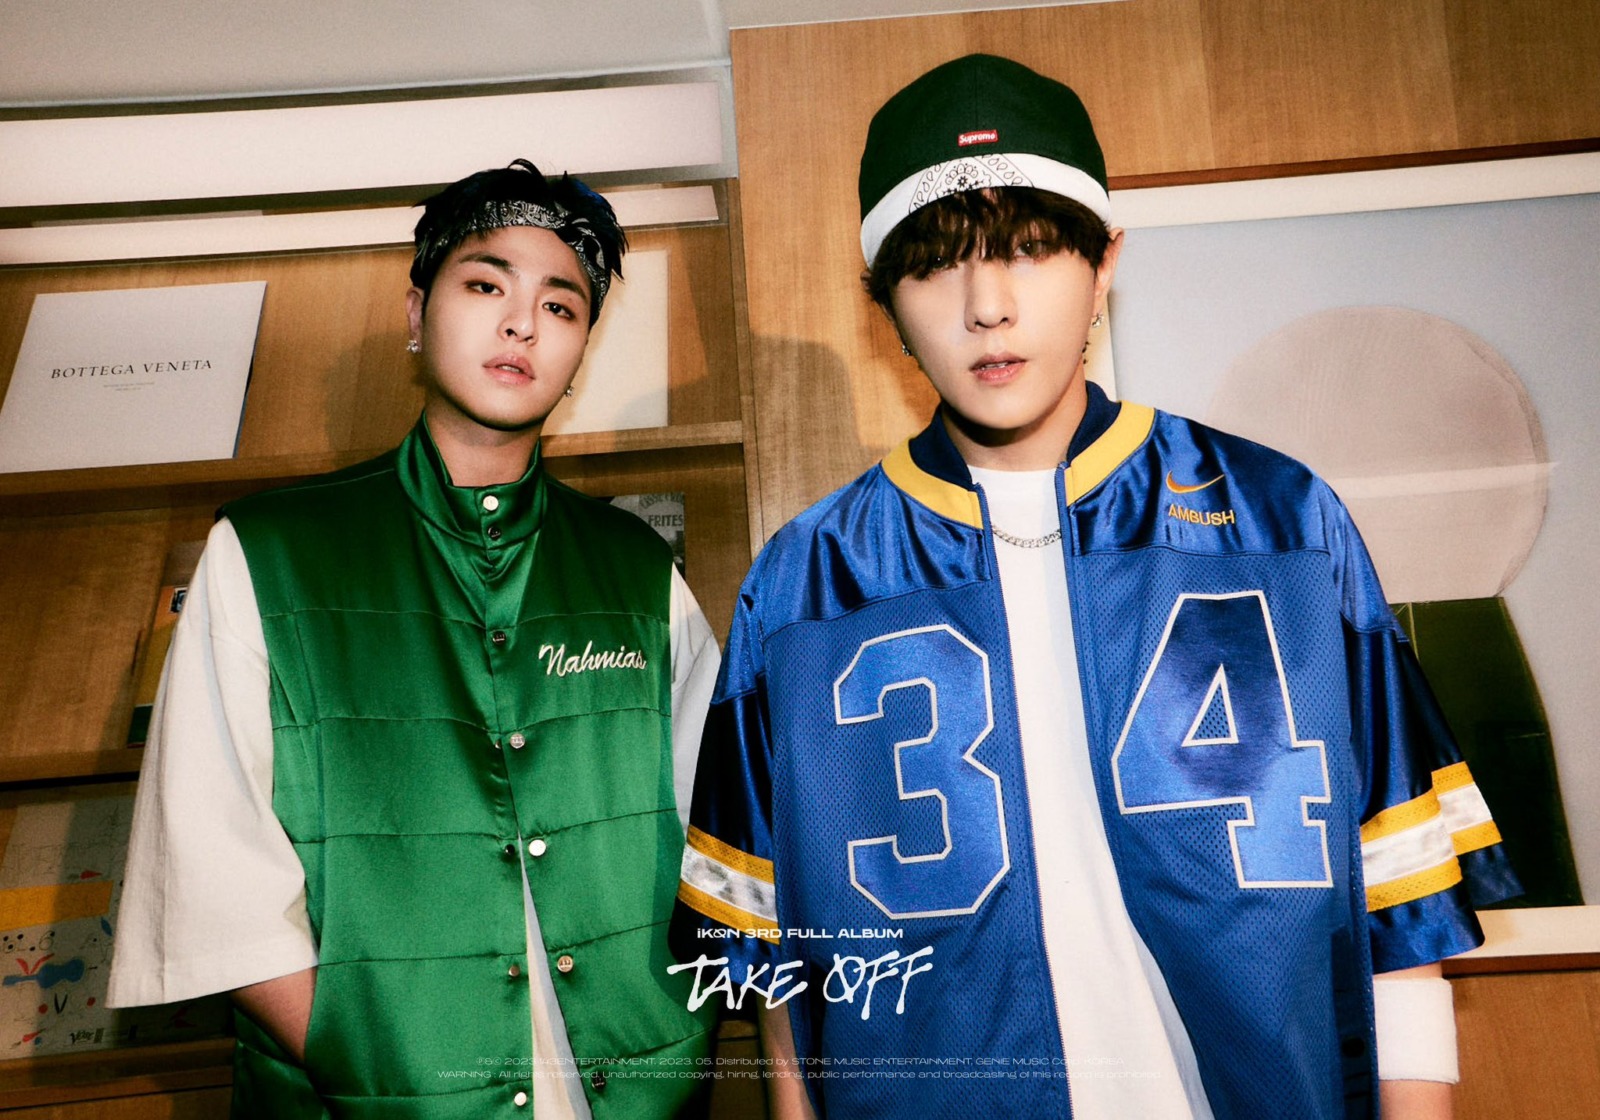 iKON 3rd Full Album「TAKE OFF」iKON「딴따라 (Tantara / タンタラ)」